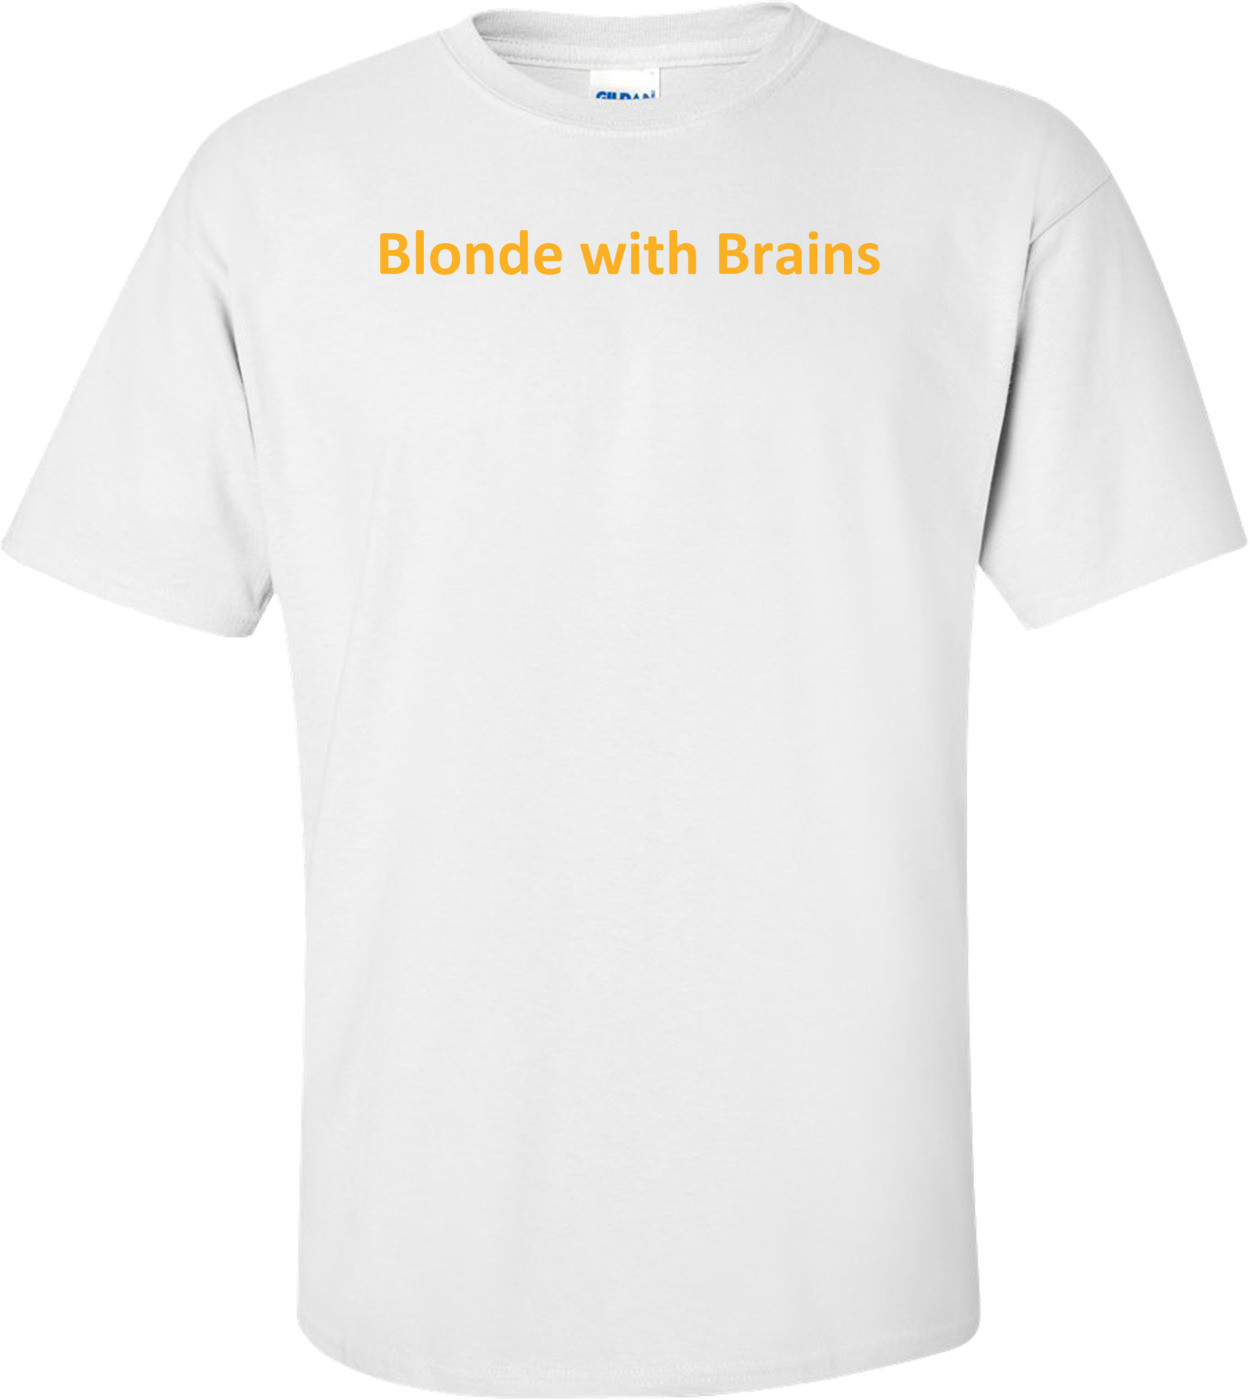 Blonde with Brains 